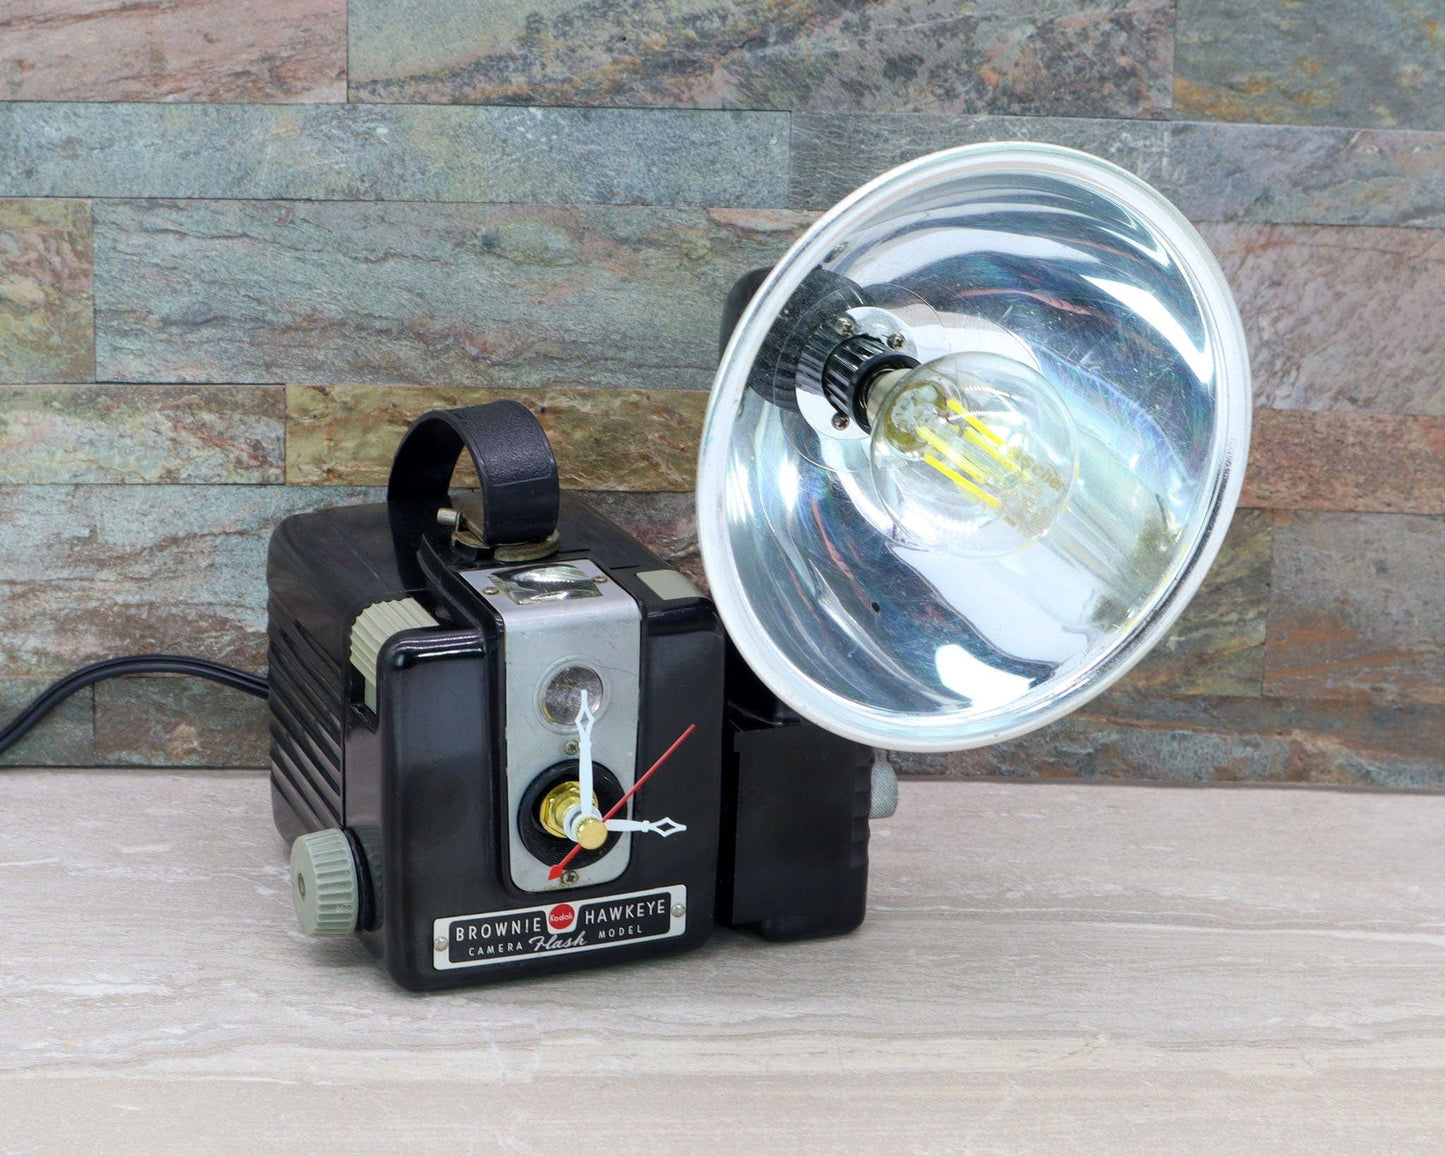 LightAndTimeArt Camera clocks Vintage LED Reading Lamp and Clock, Task Lamp, Kodak Brownie Hawkeye Lamp, Camera art, vintage lover gift